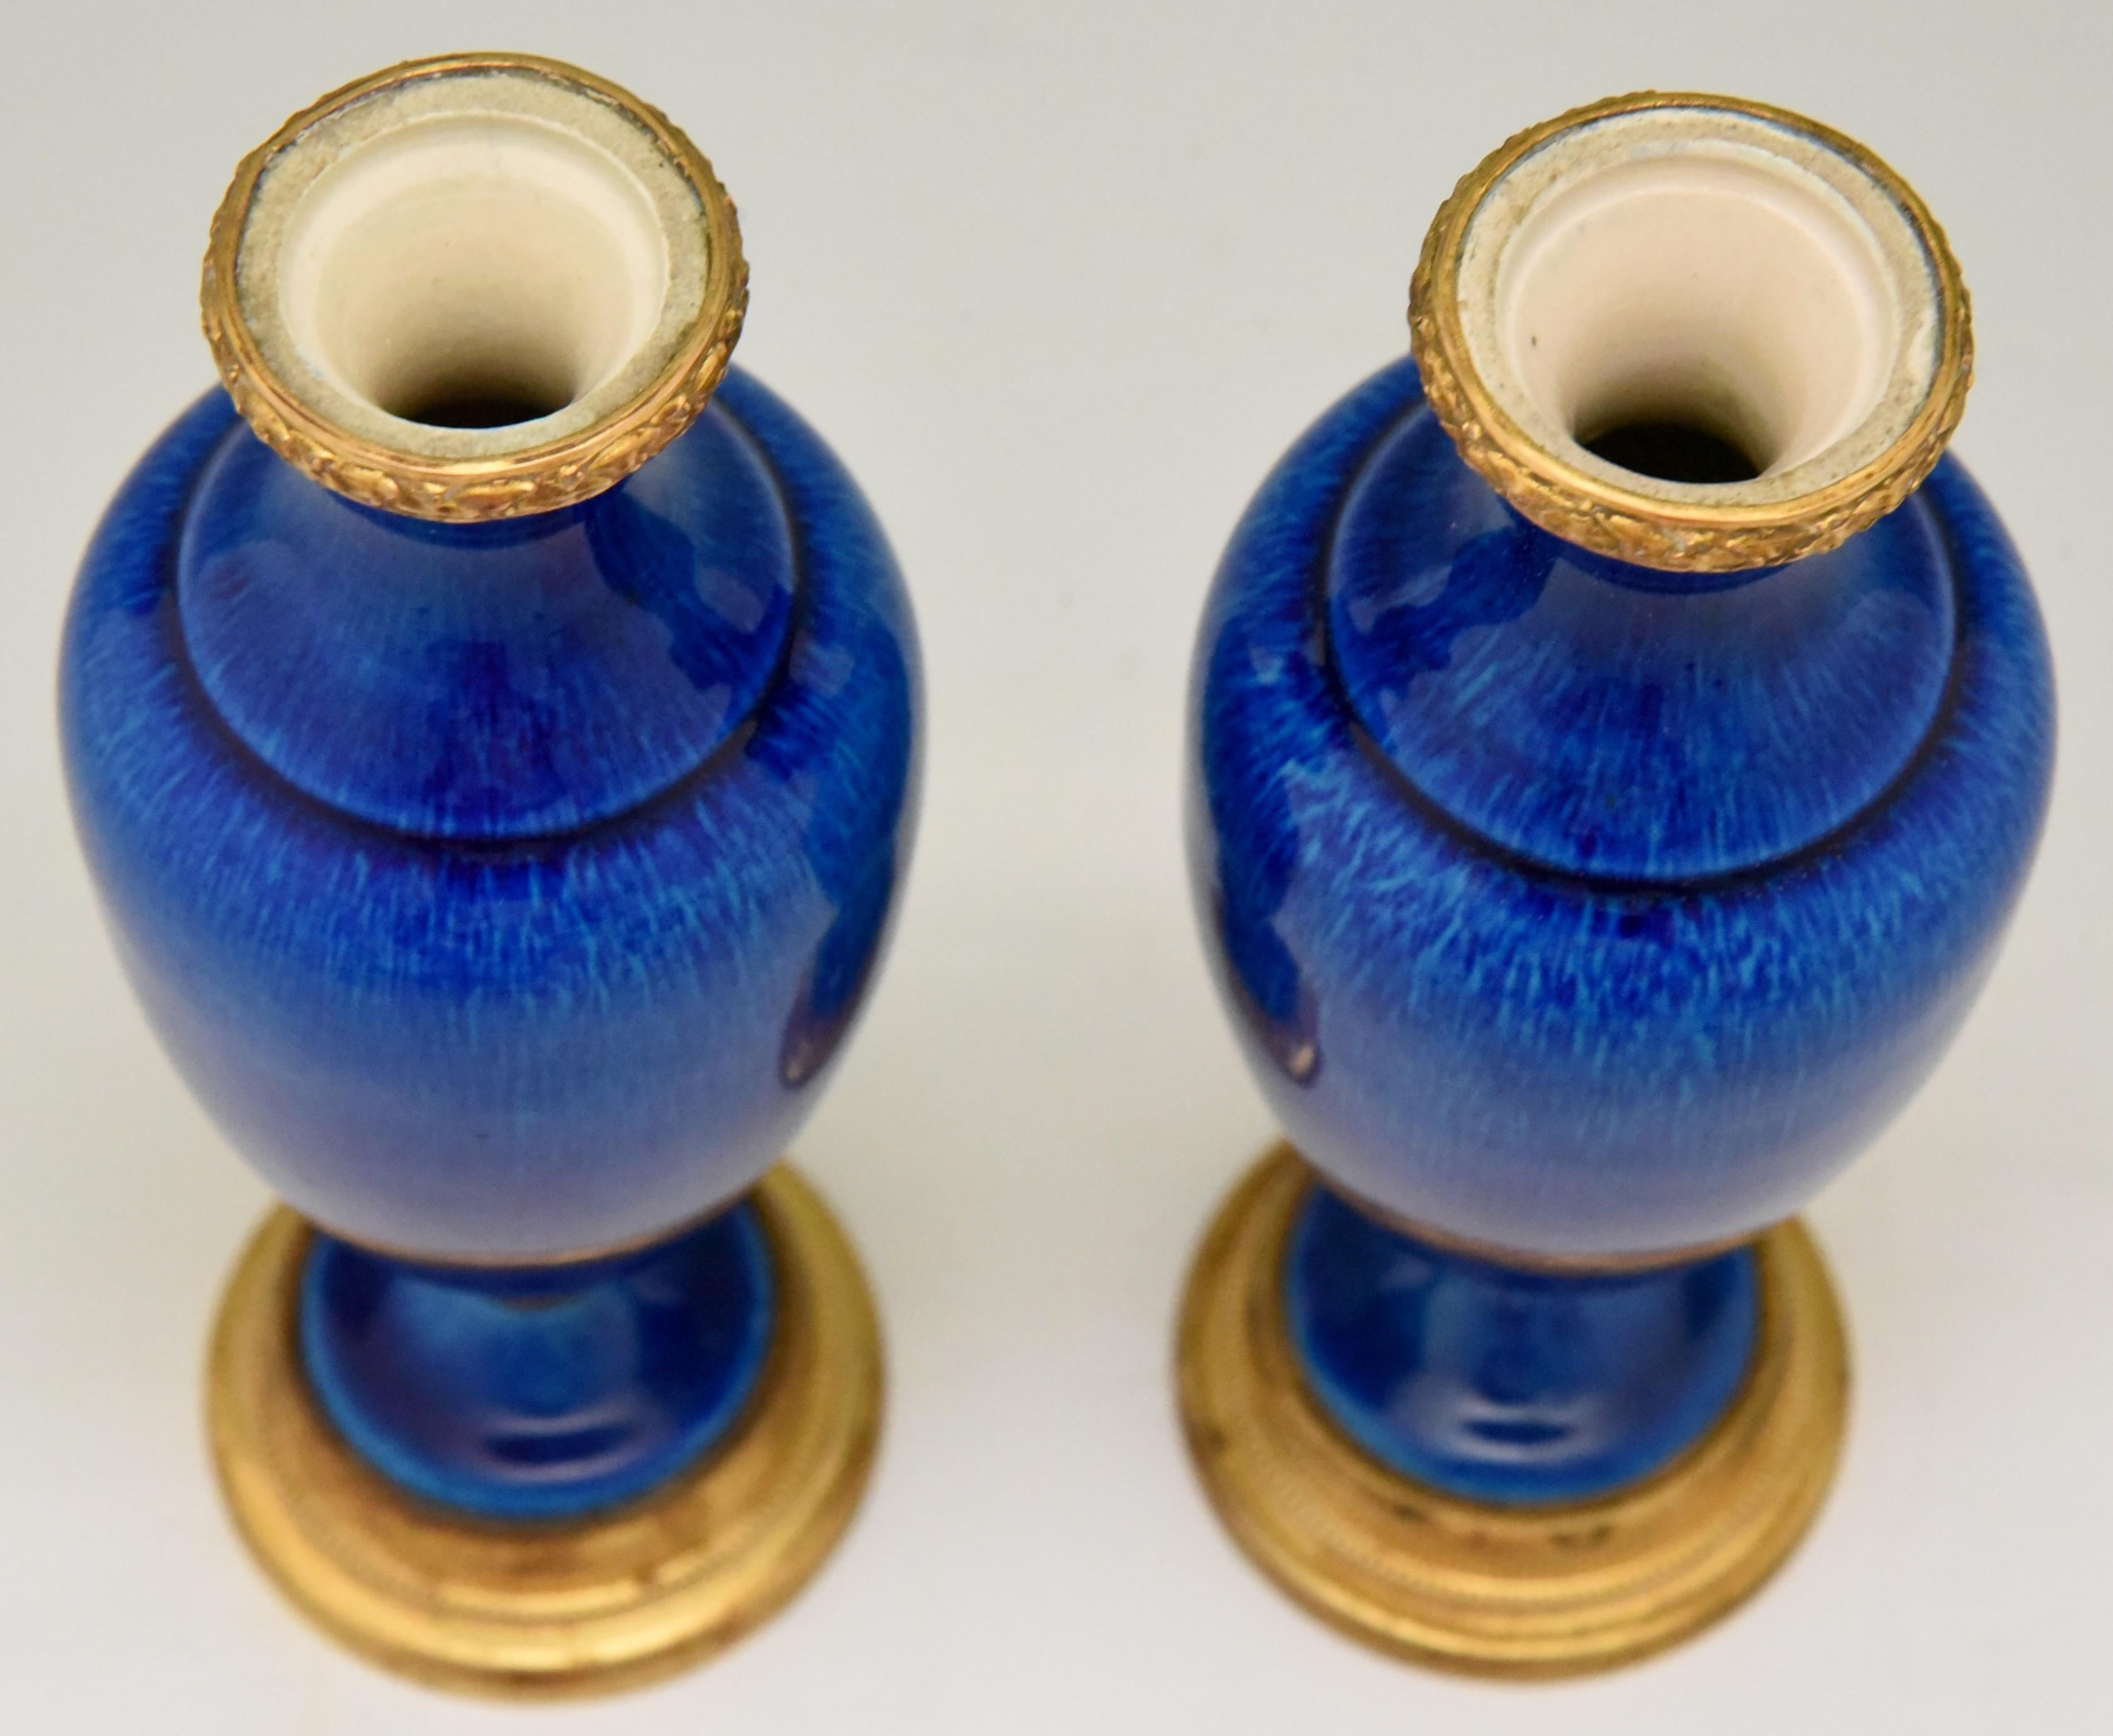 20th Century Pair of Blue Ceramic and Bronze Vases or Urns Paul Milet for Sèvres, circa 1900